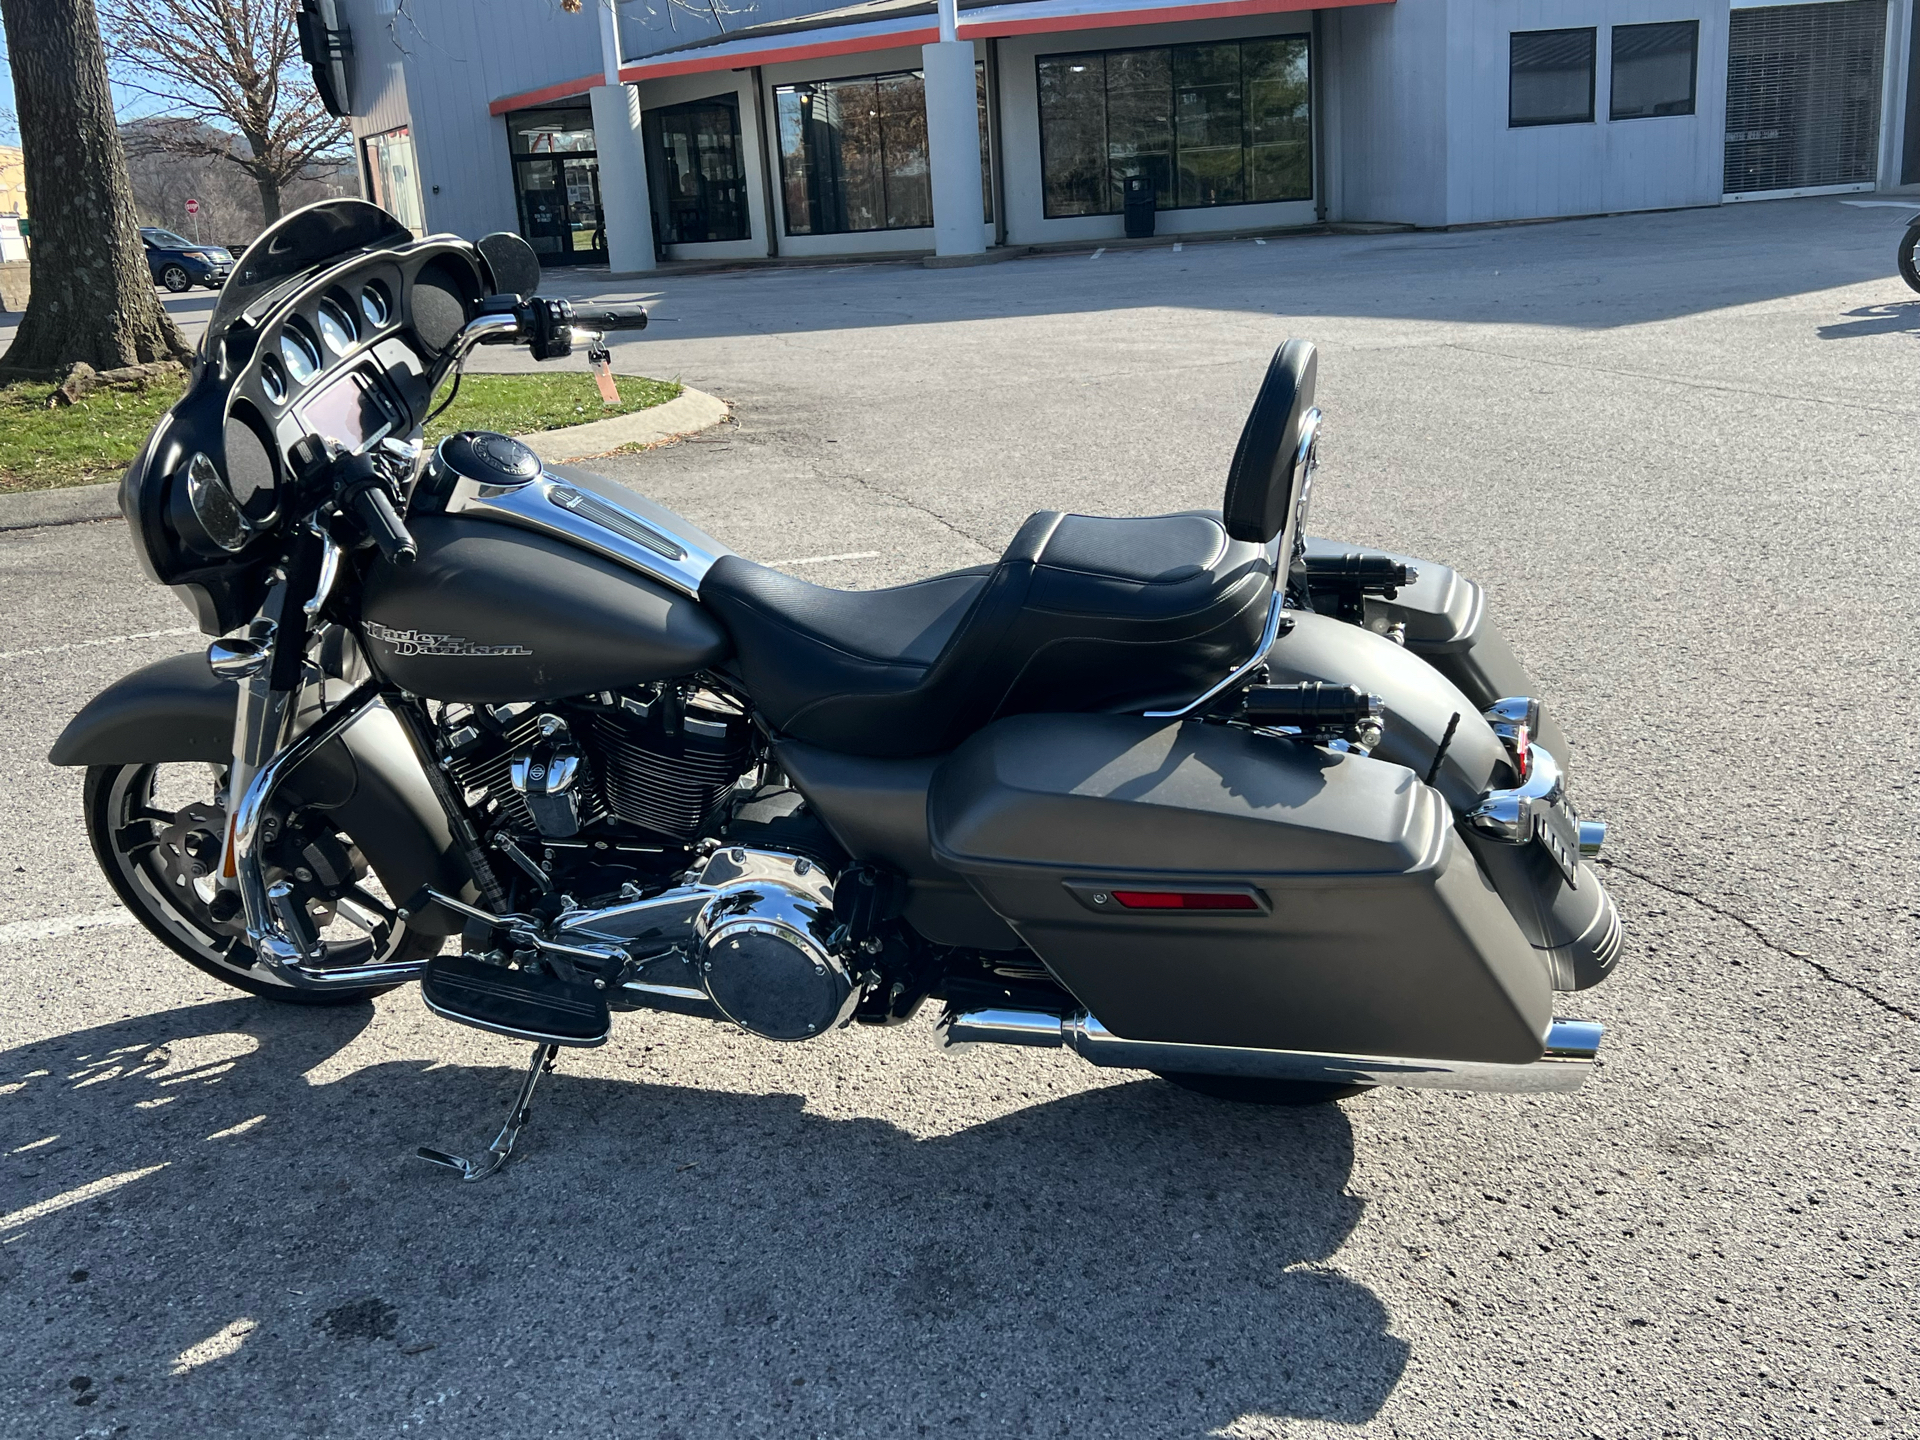 2018 Harley-Davidson Street Glide® in Franklin, Tennessee - Photo 19